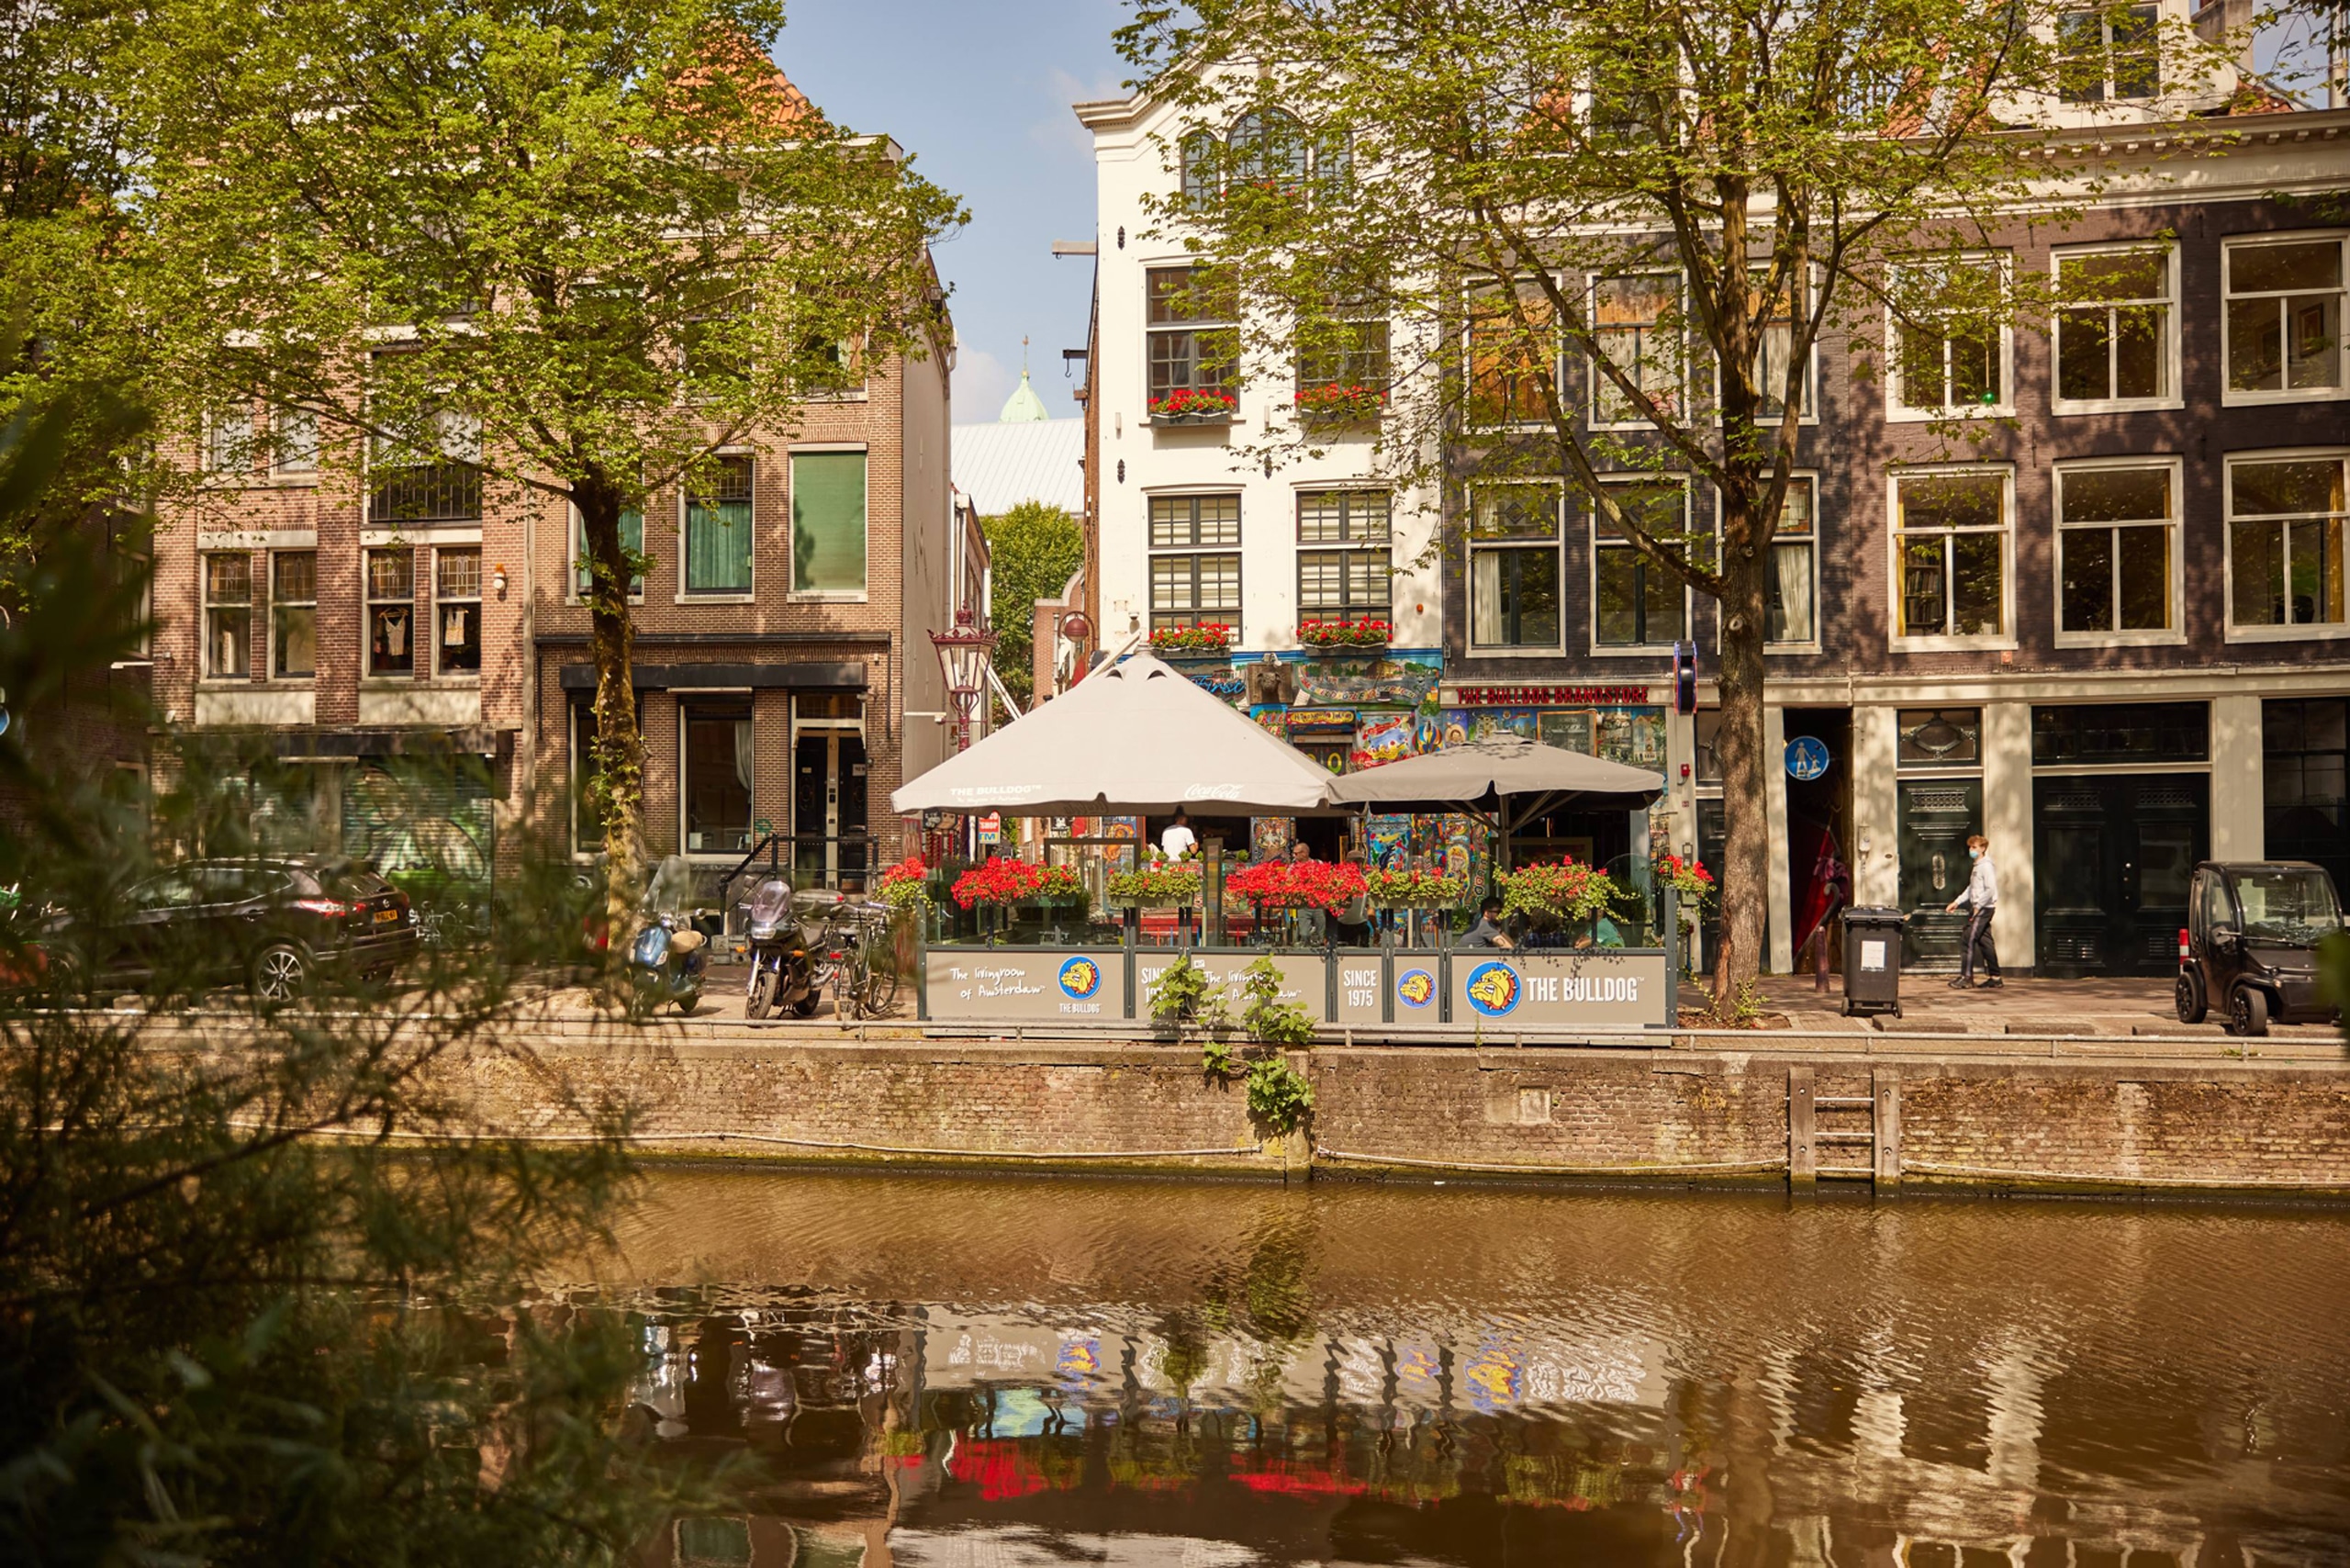 The Bulldog Coffeeshop, Amsterdam